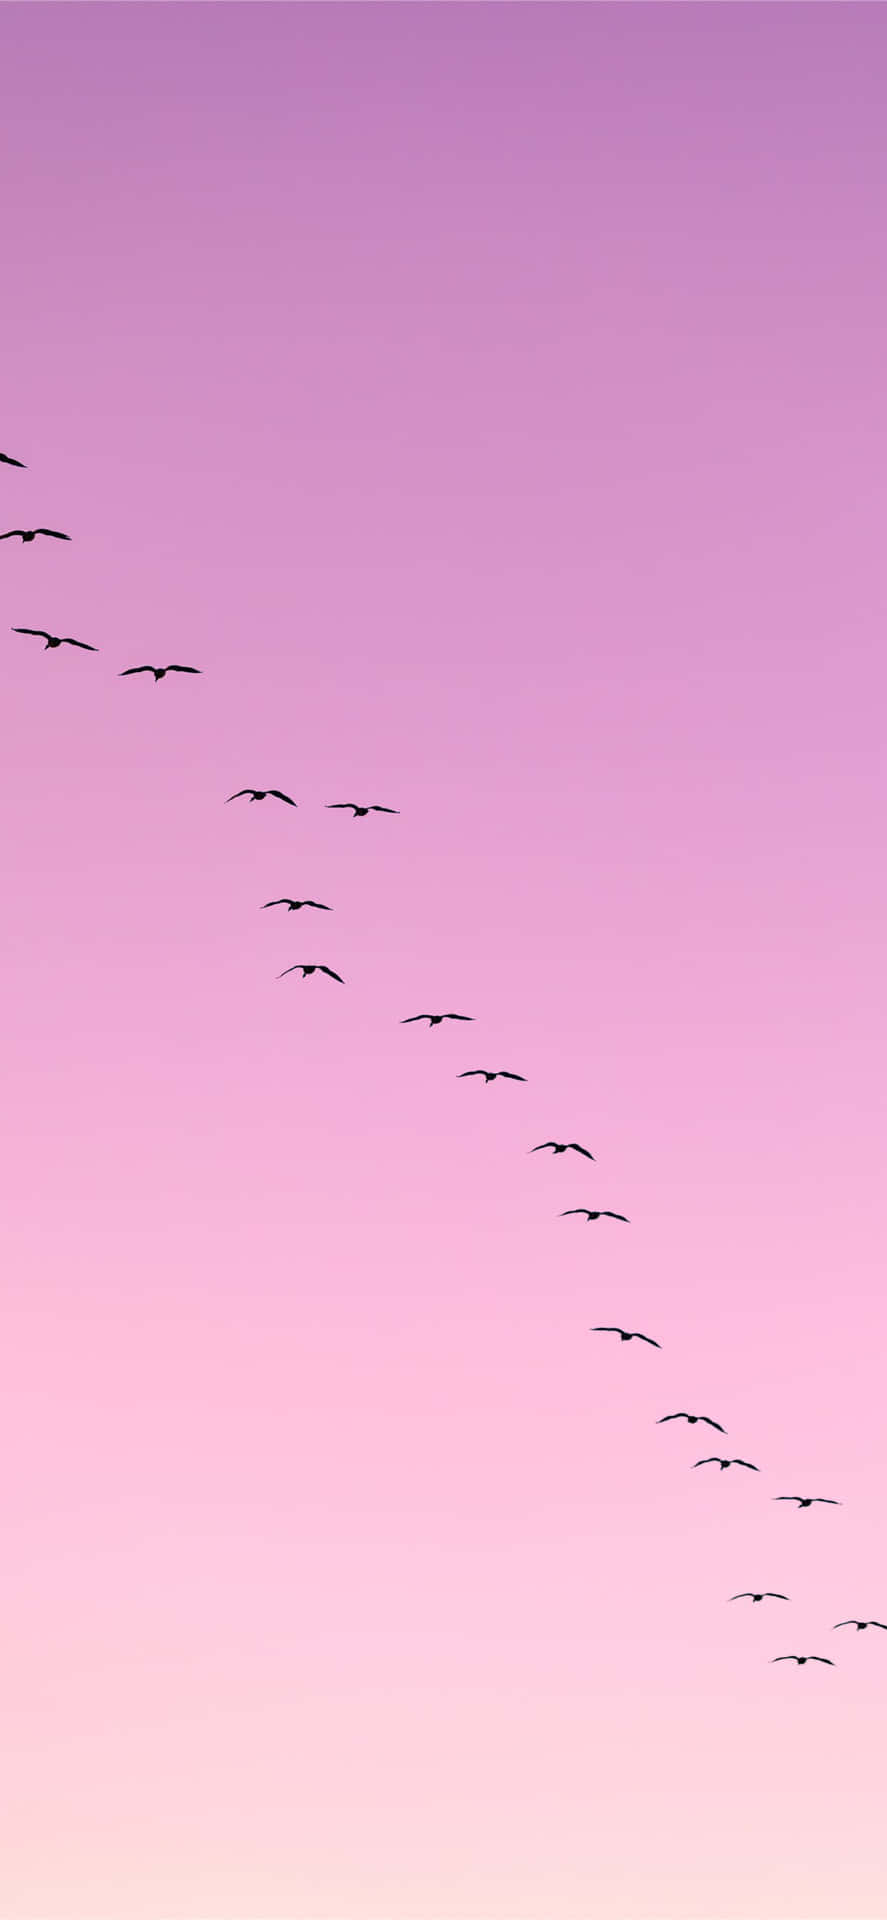 Flying Bird Trailing In Pink Sky Wallpaper